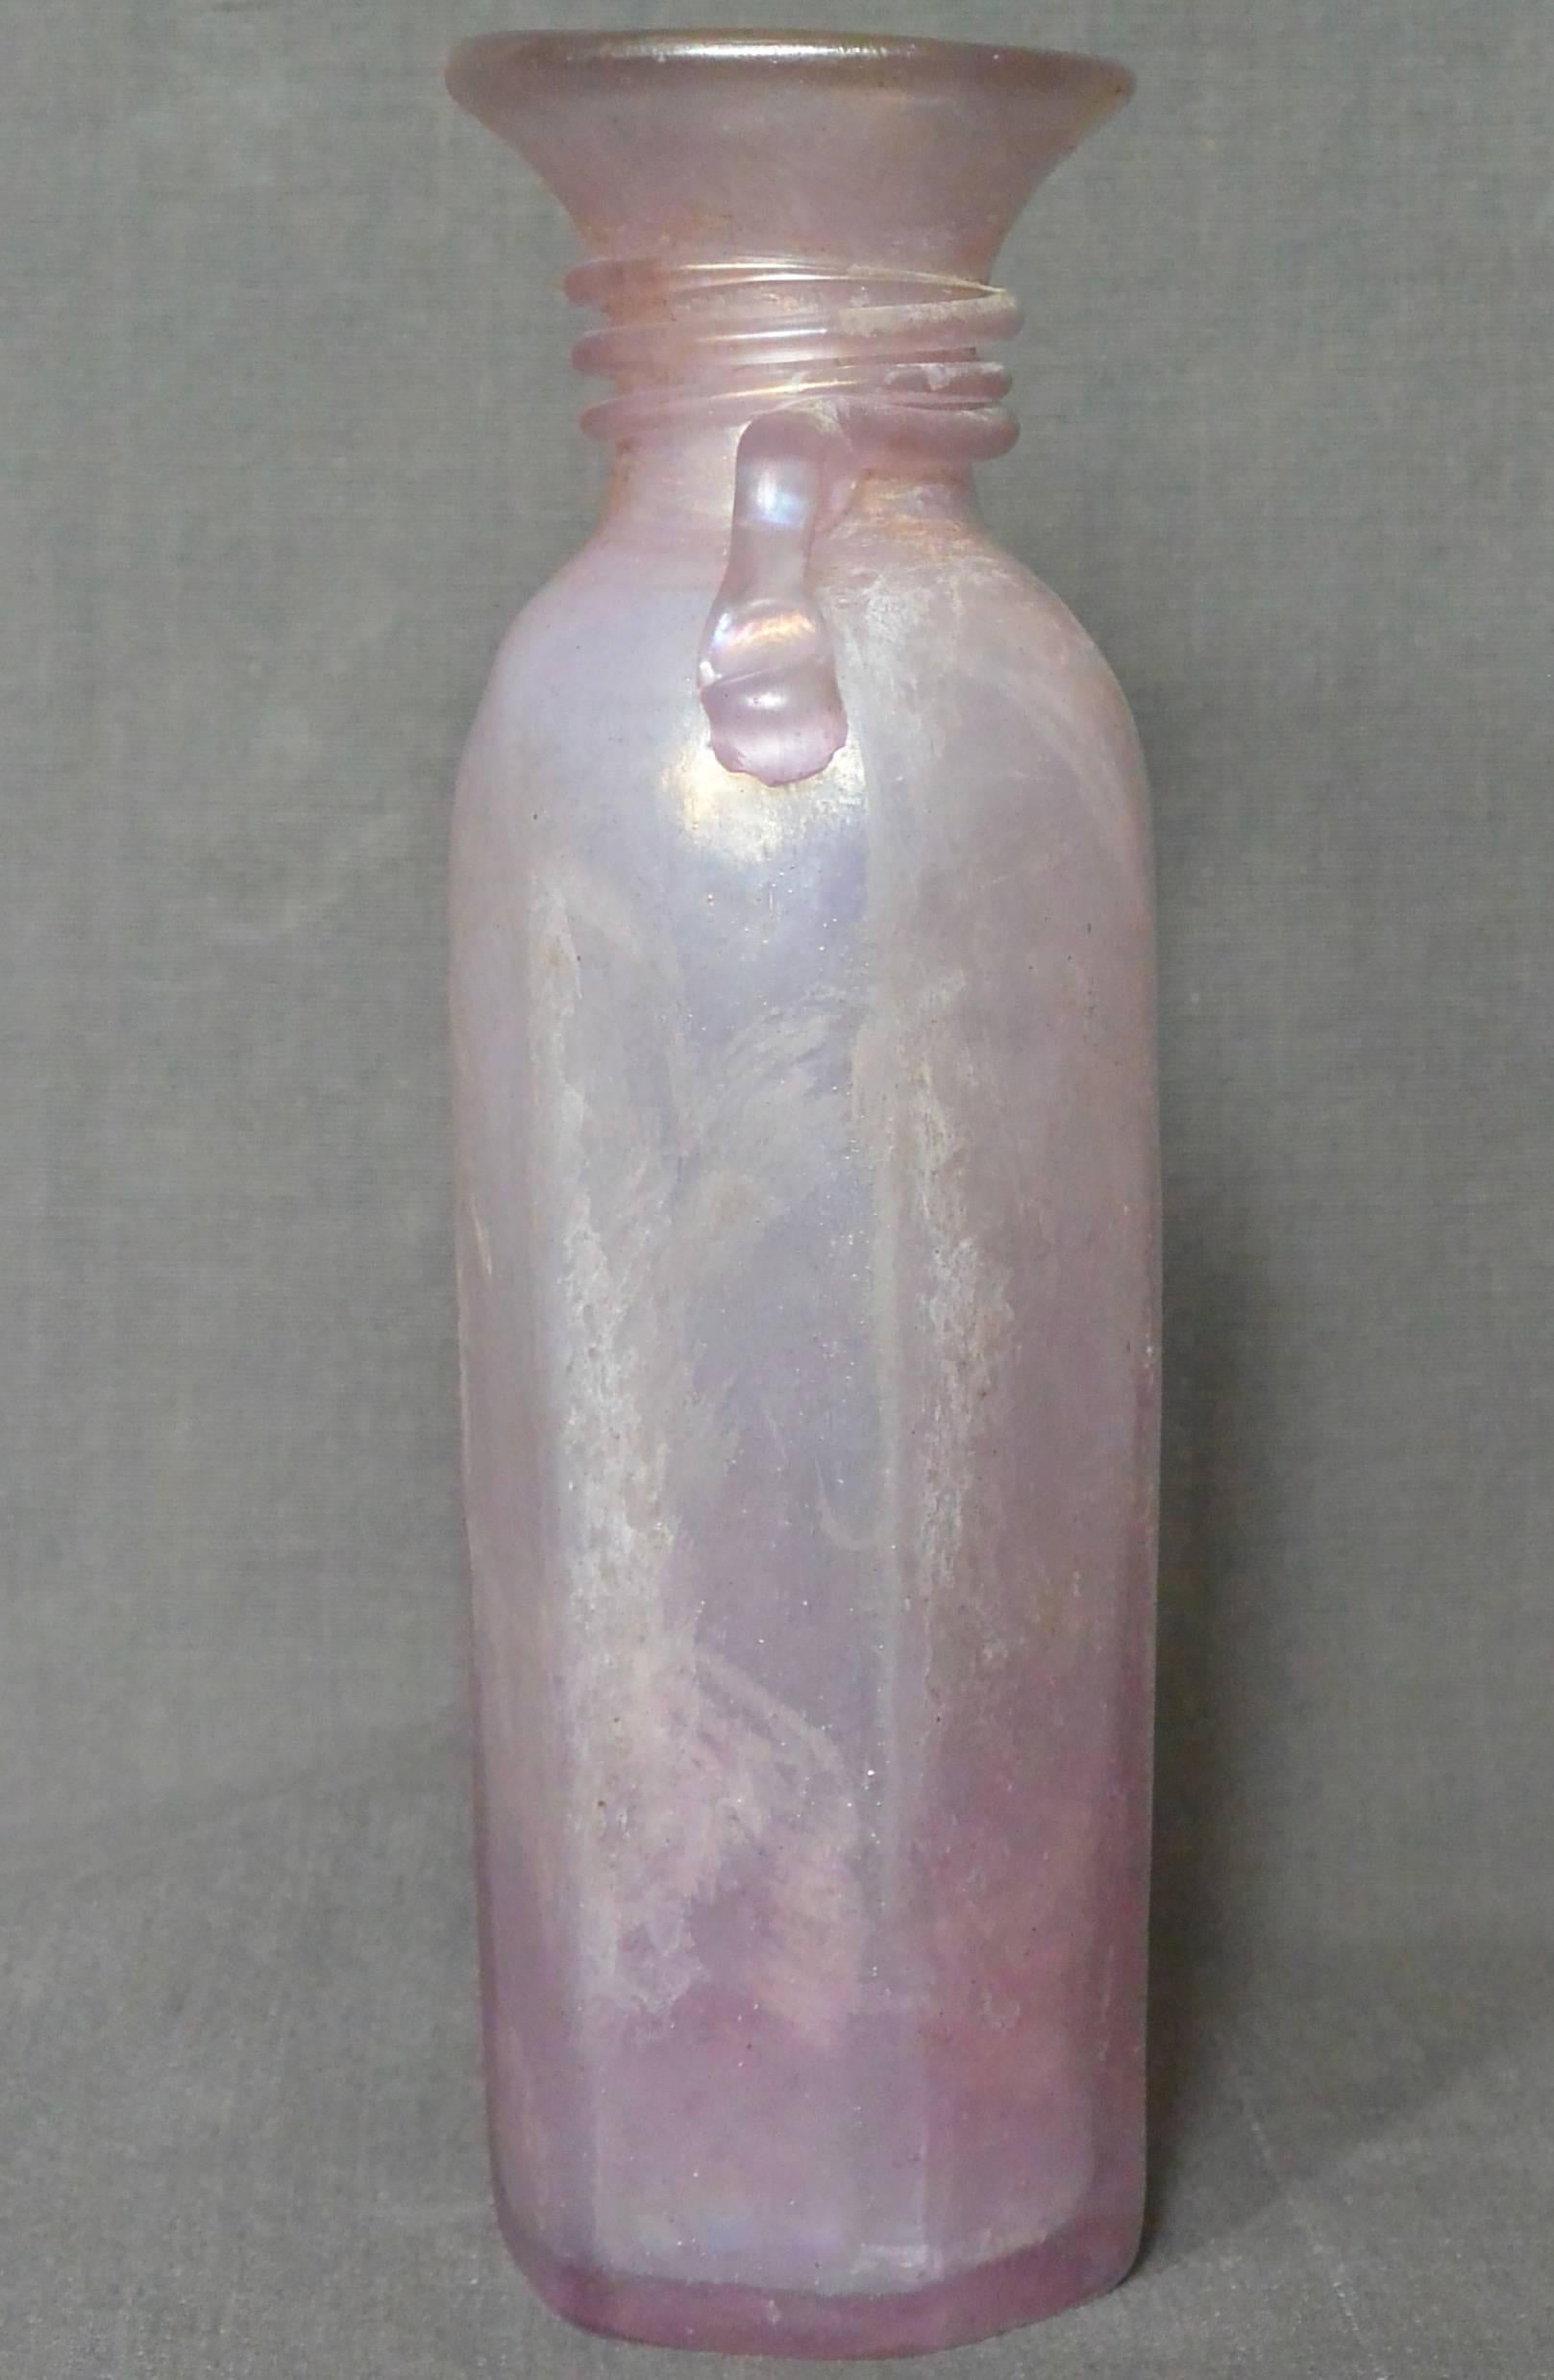 Seguso Scavo Murano amethyst vase. Purple / amethyst bud vase with handle, Venice, Italy, circa 1940.
Dimensions: 8.75” height x 2.38